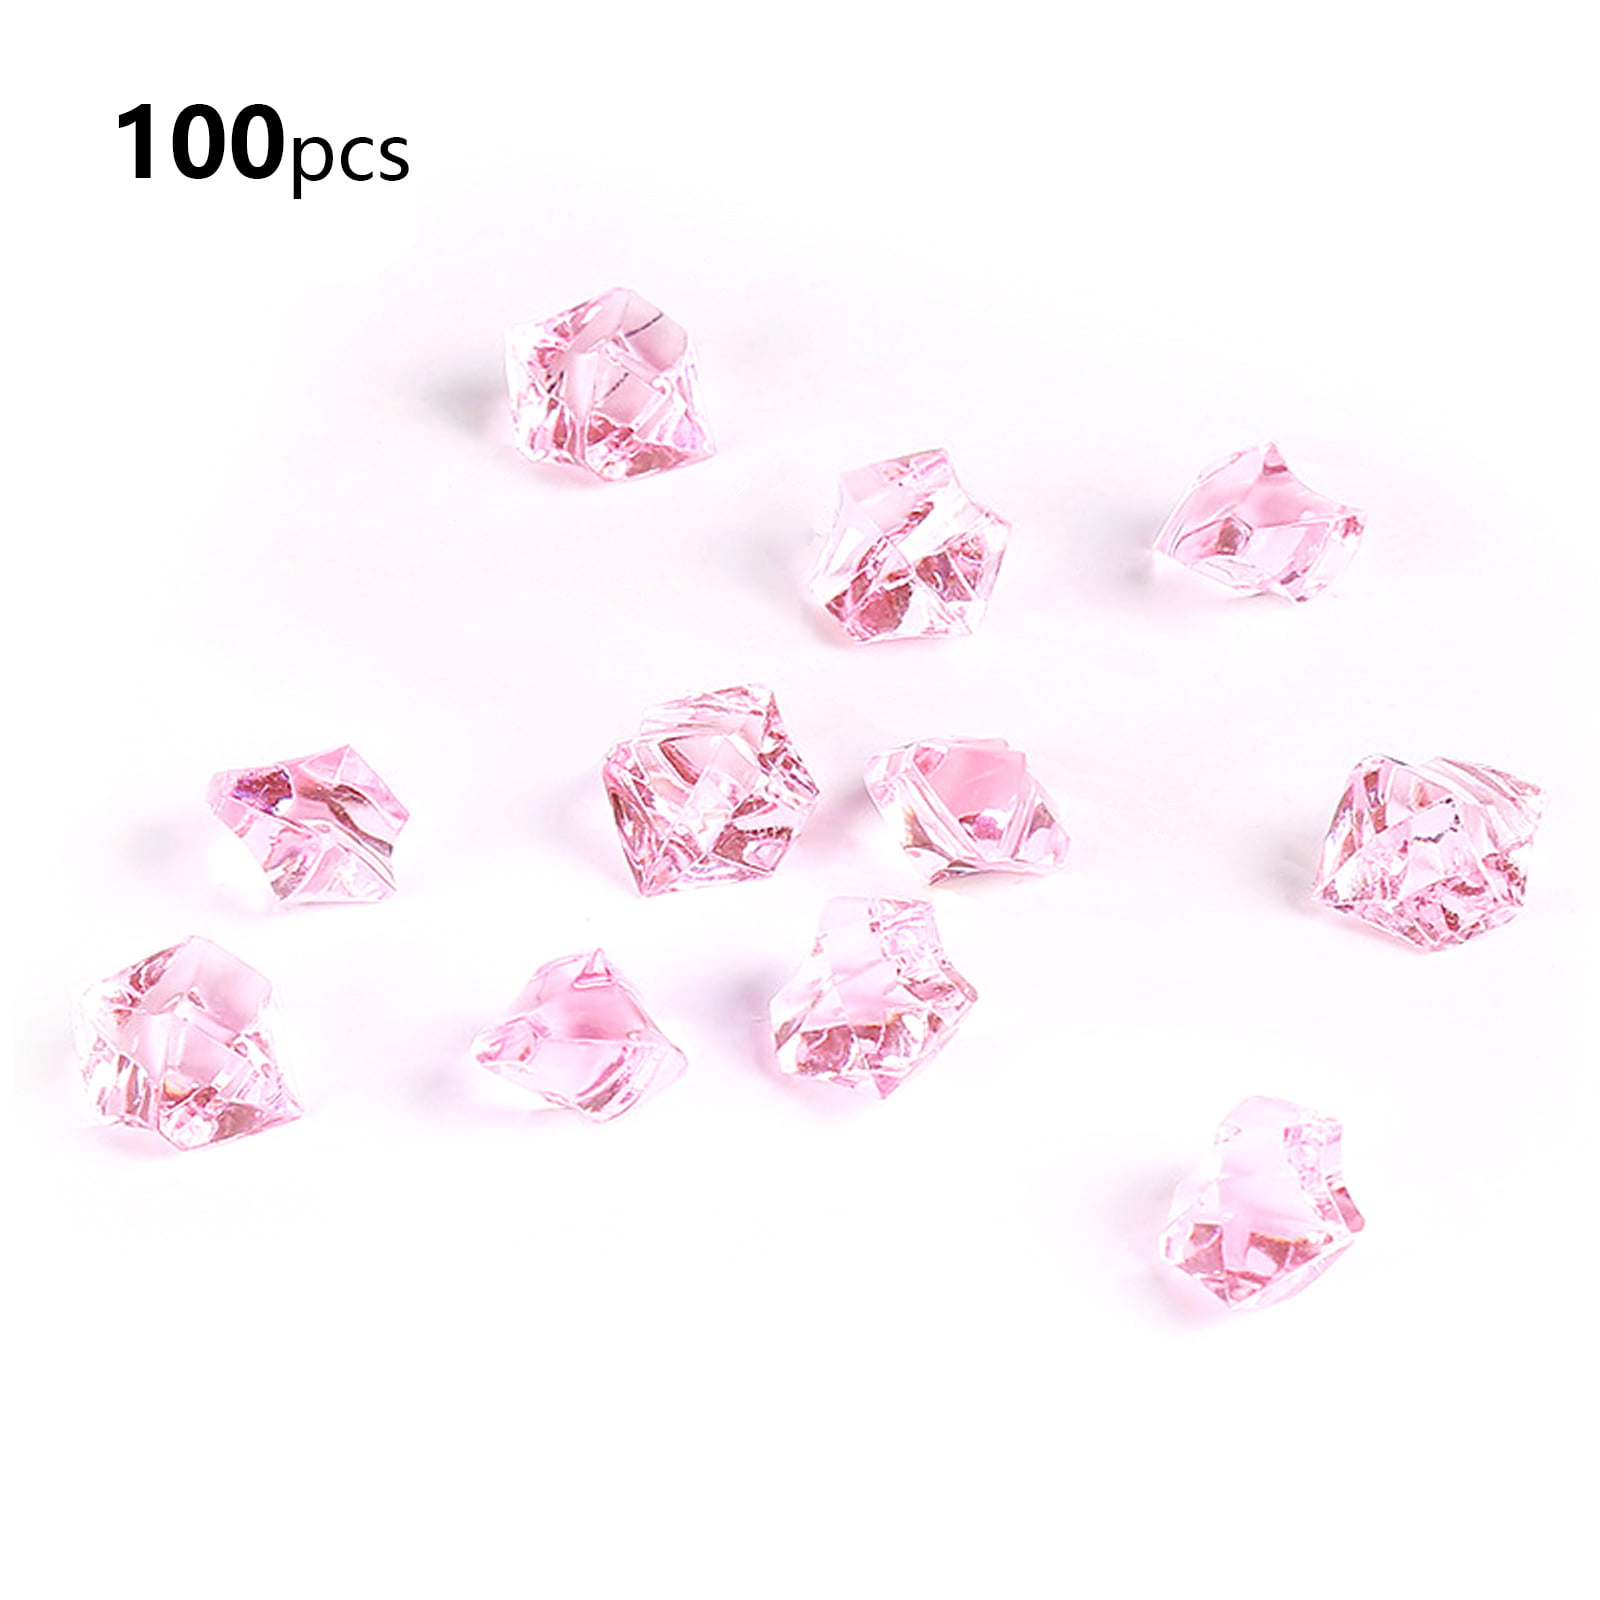 100/200x Acrylic Clear Fake Crushed Ice Rocks Fake Diamonds Vase Fillers Decors 